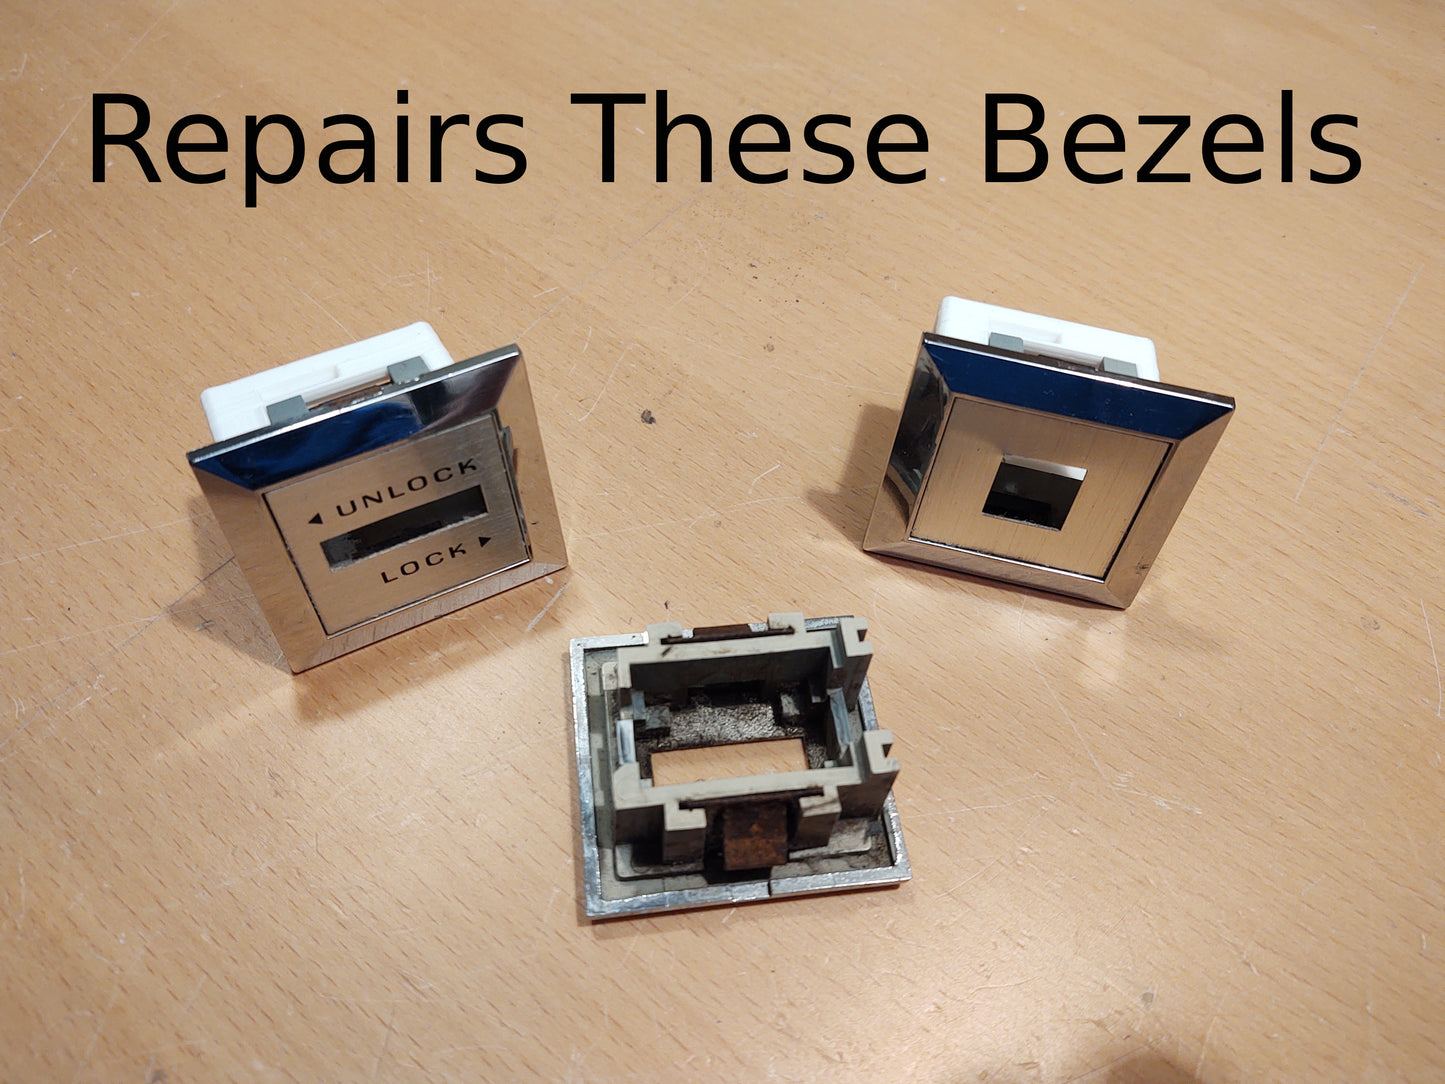 Bezels kit repairs